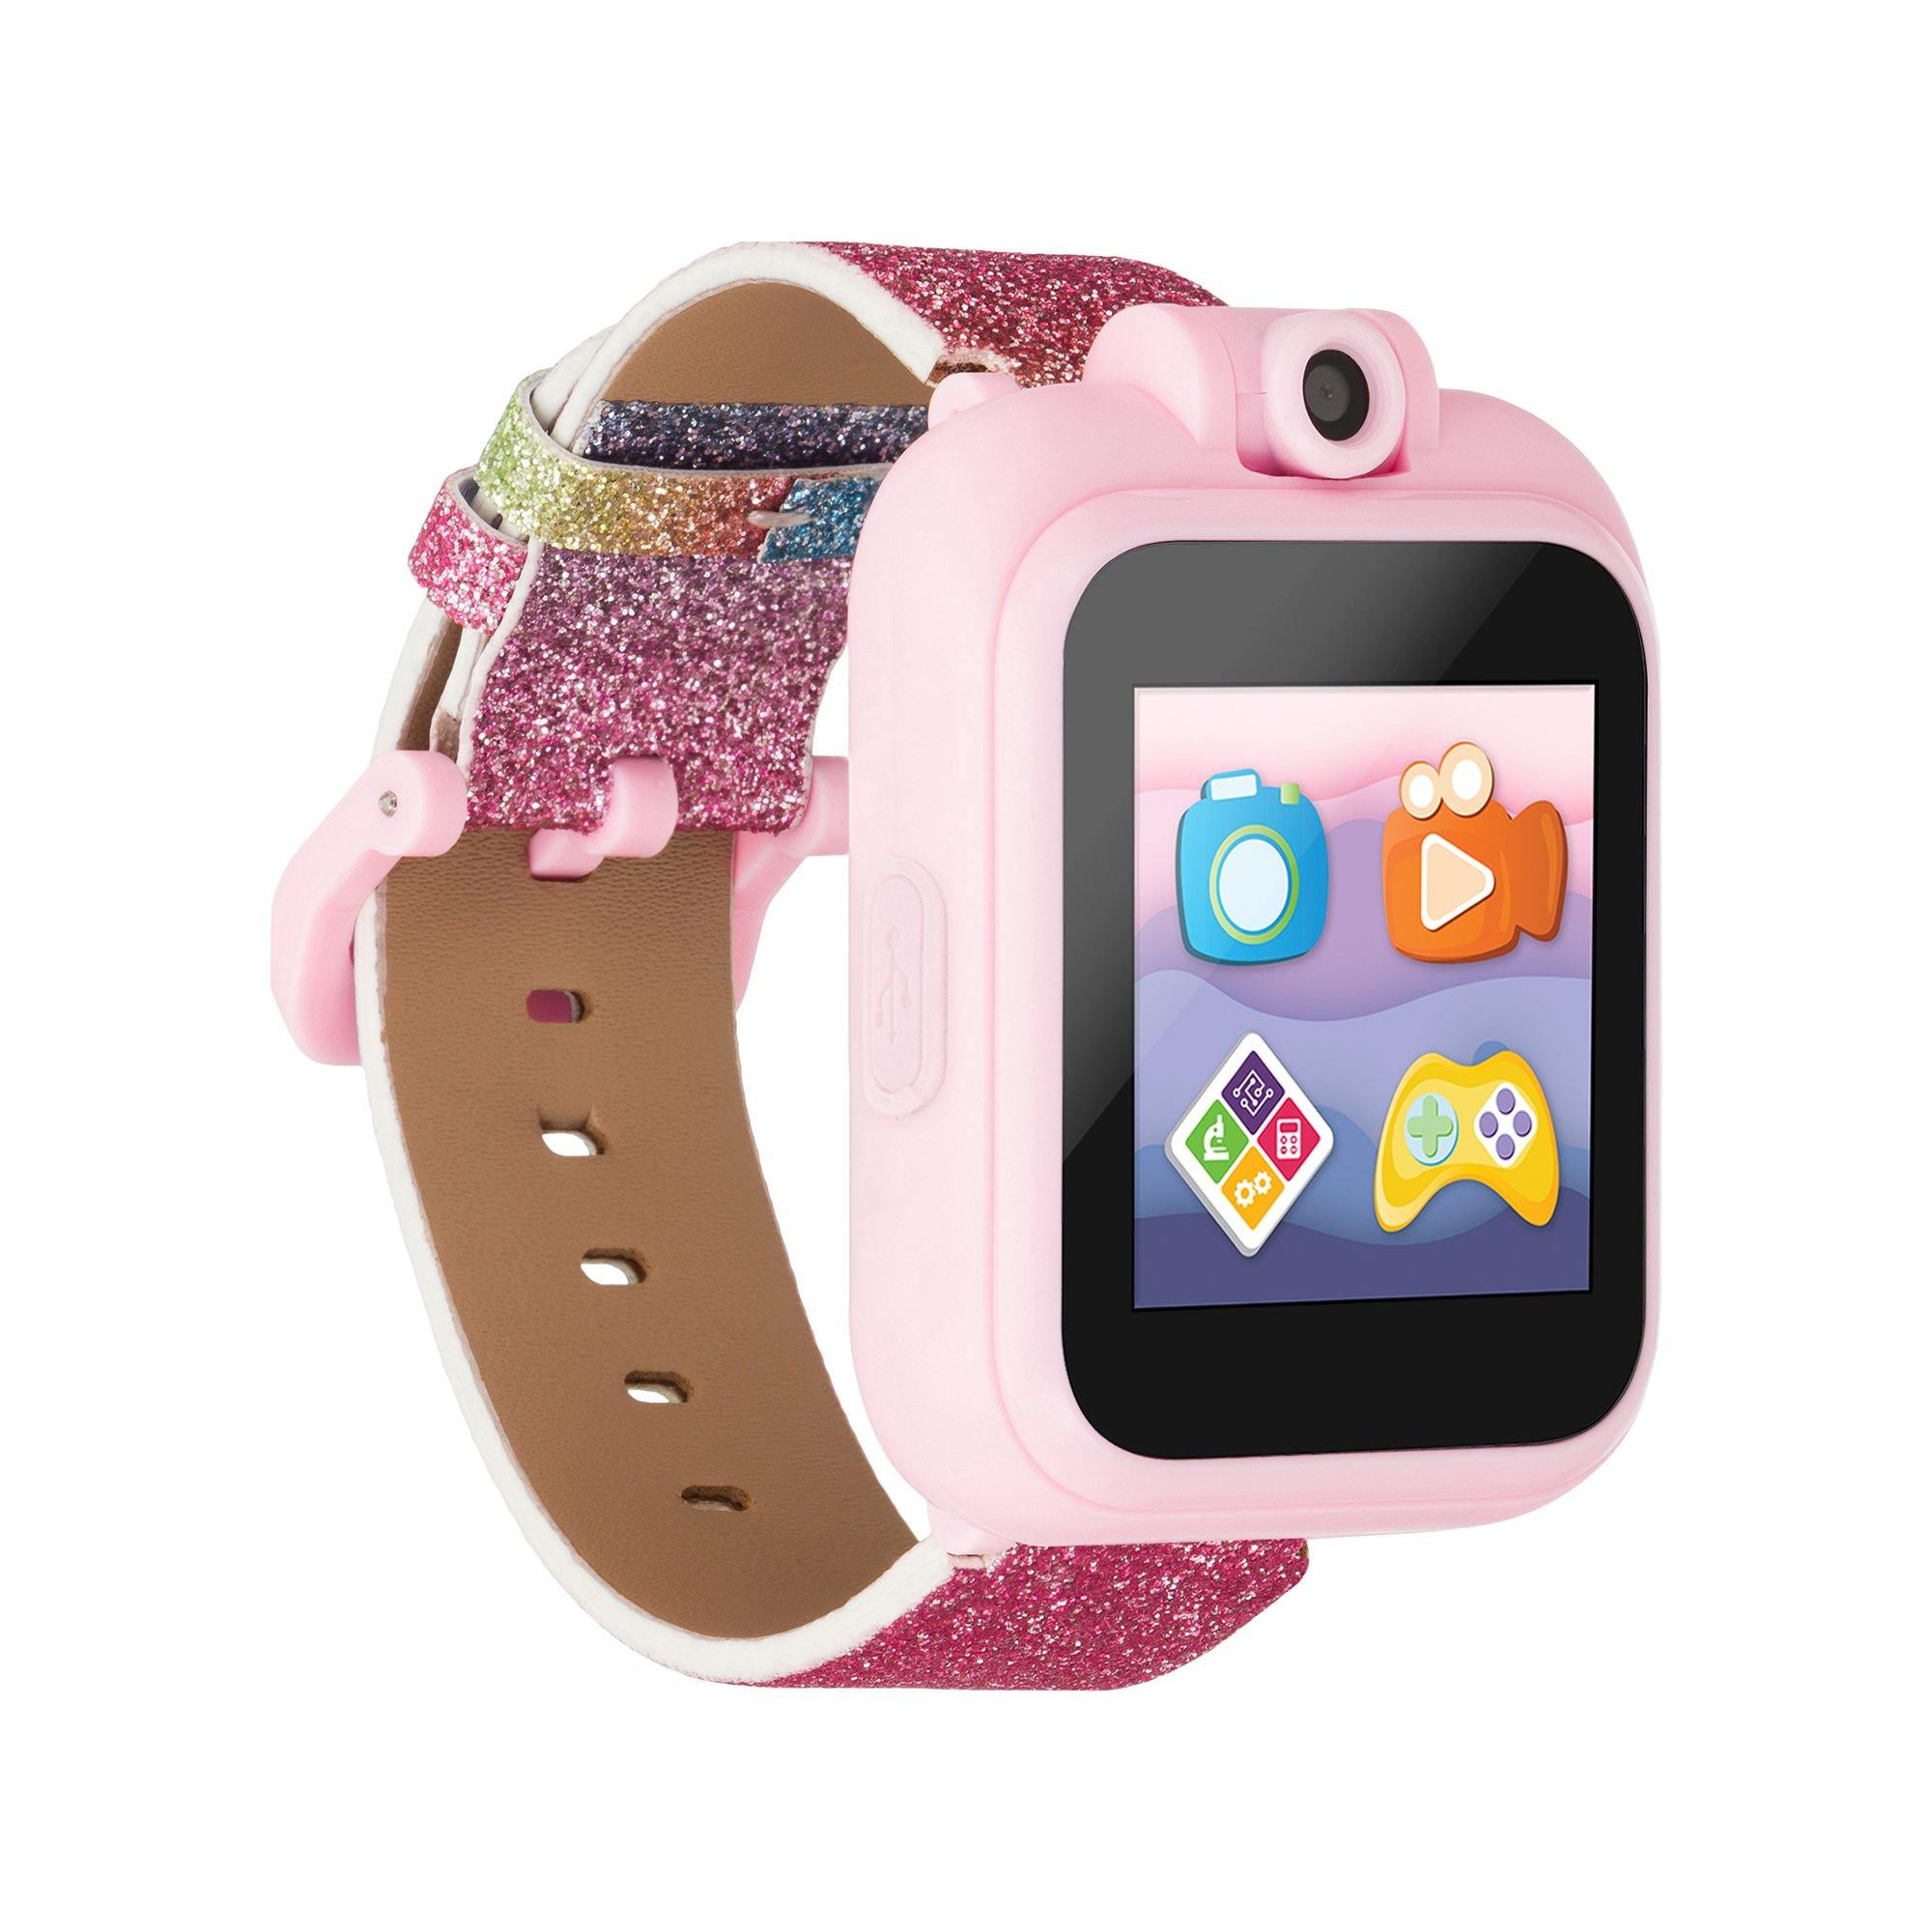 PlayZoom 2 Kids Smartwatch: Rainbow Glitter affordable smart watch